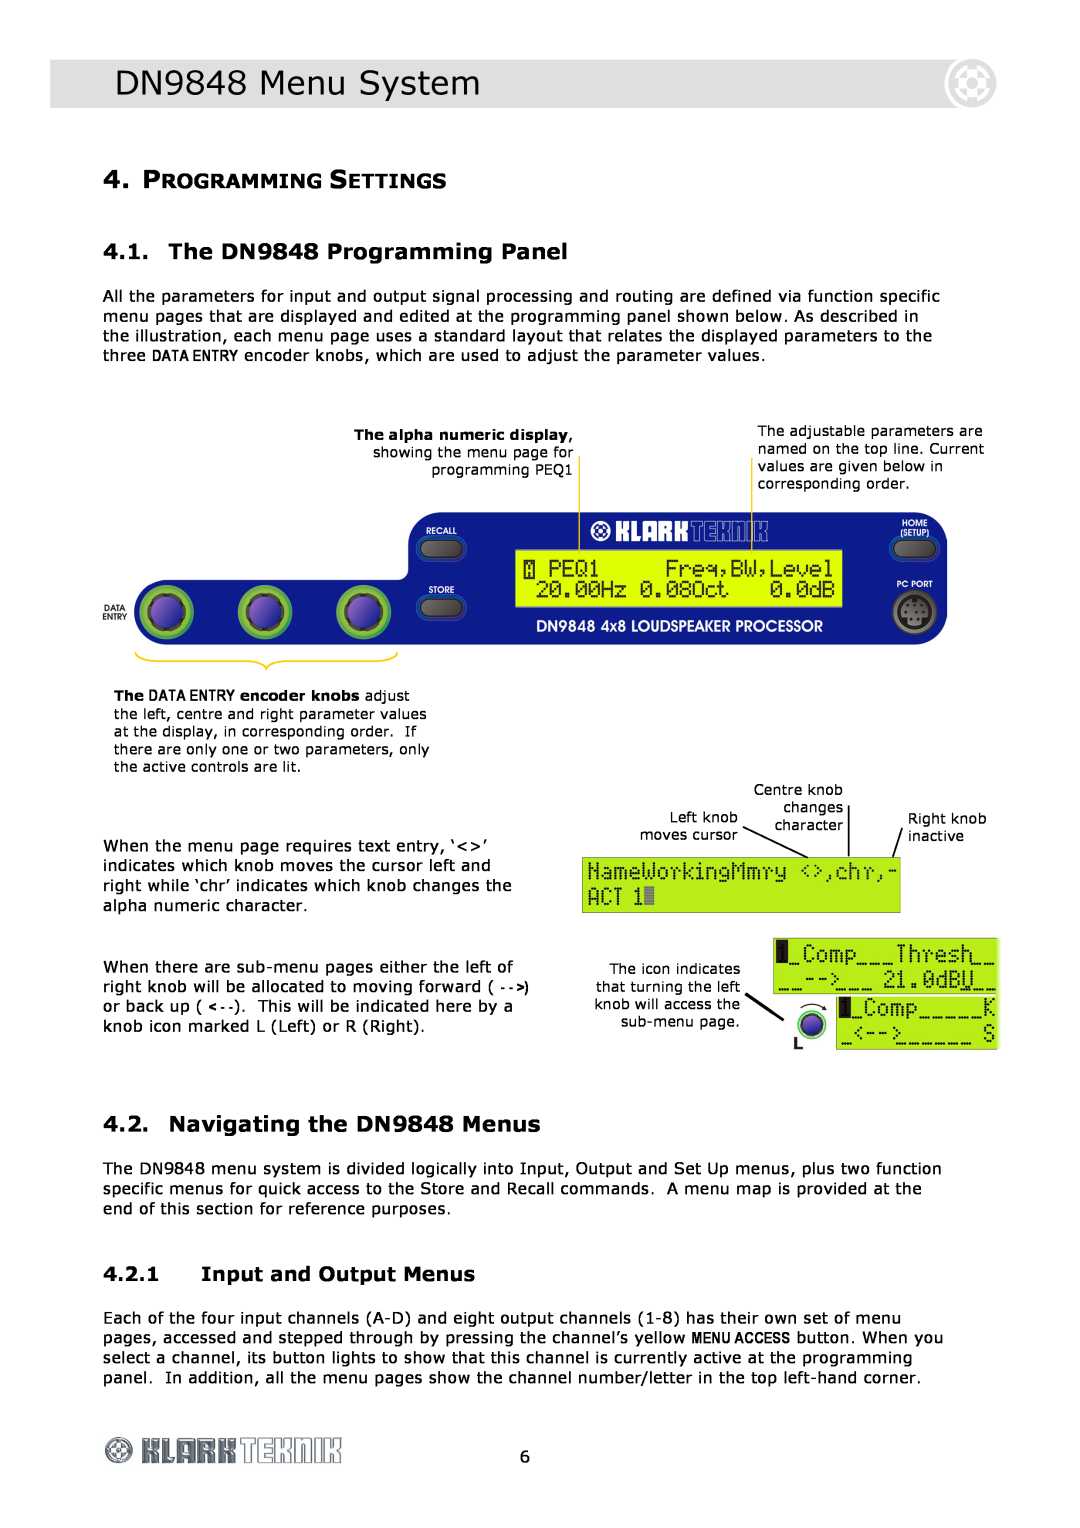 Telex DOC02-DN9848 DN9848 Menu System, The DN9848 Programming Panel, Navigating the DN9848 Menus, Programming Settings 